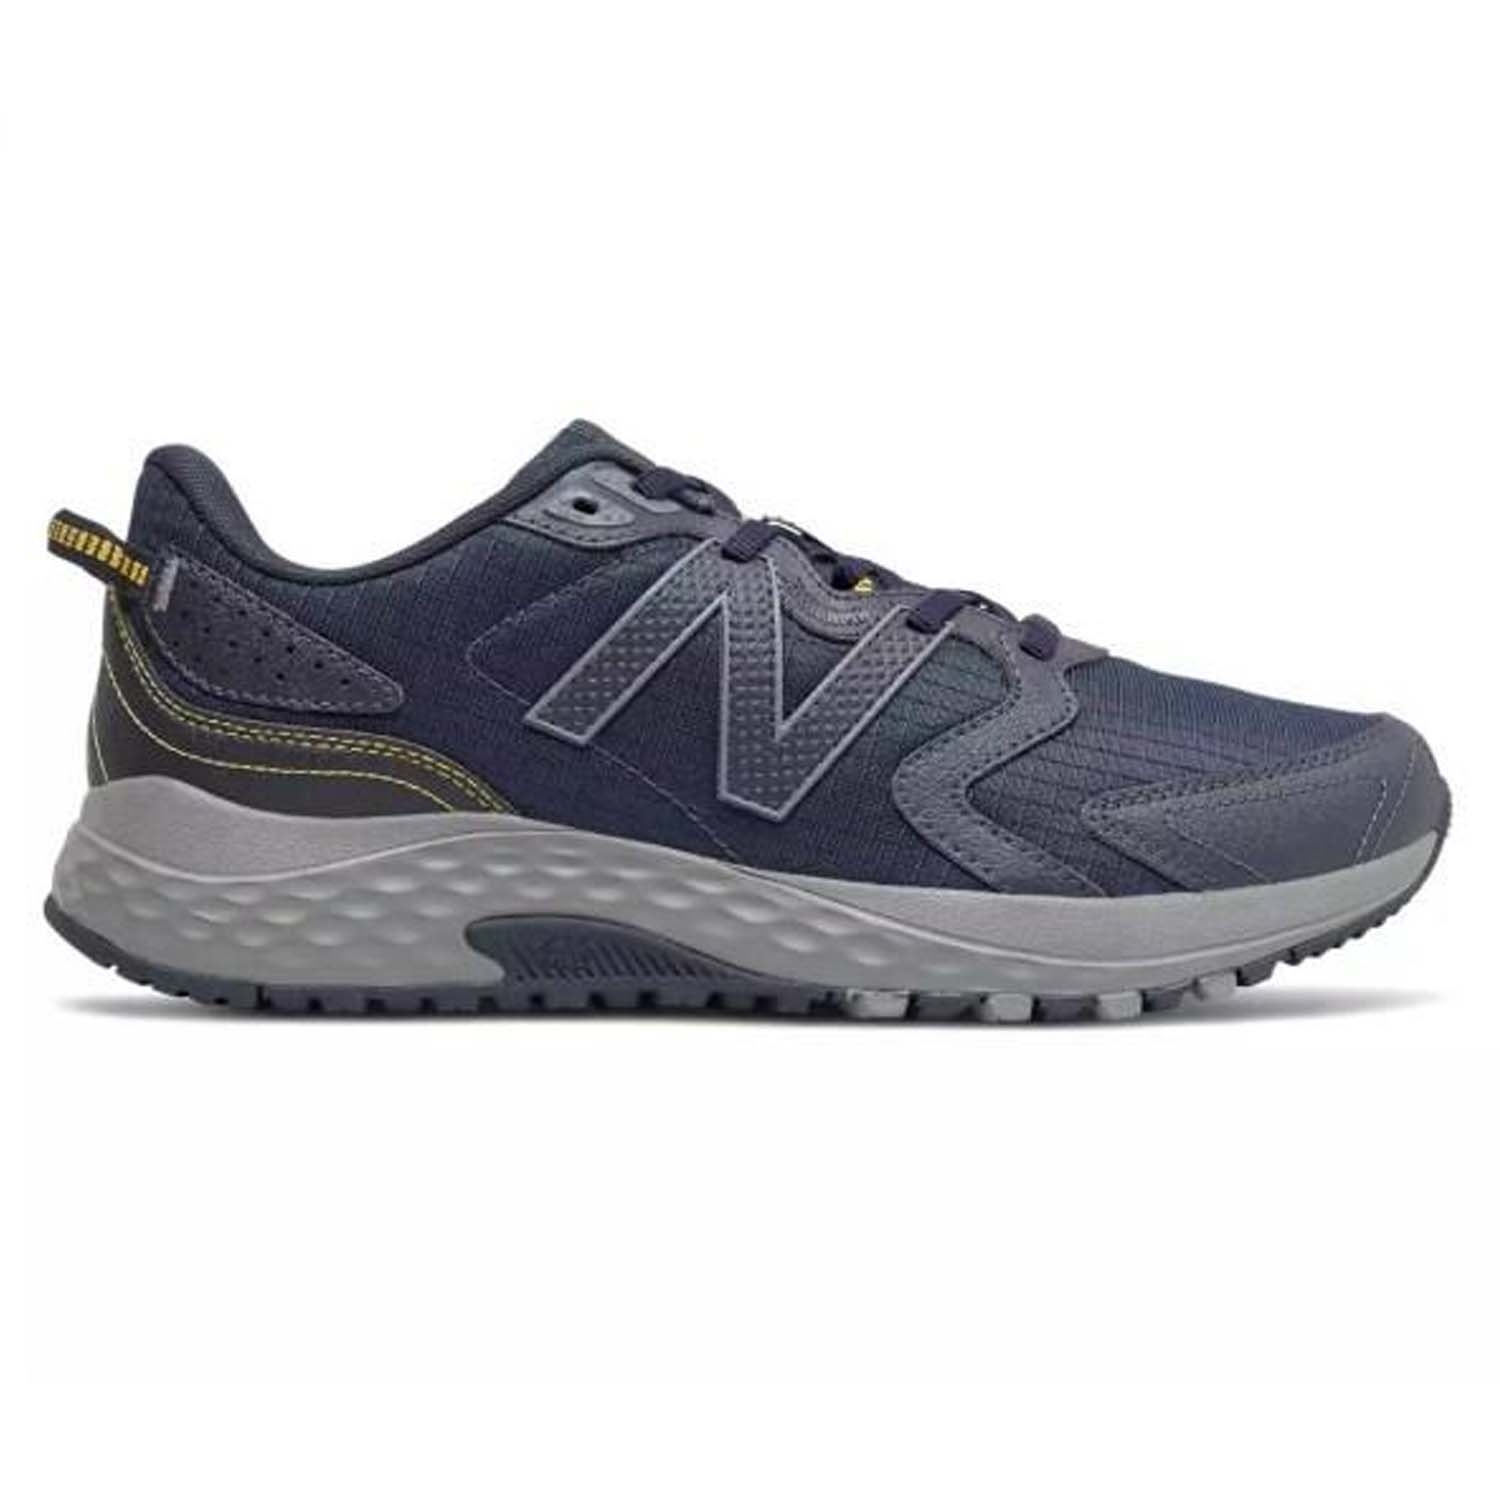 New Balance MT410 v7 (2E) Wide Mens Trail Running Shoes: Navy/Harvest ...